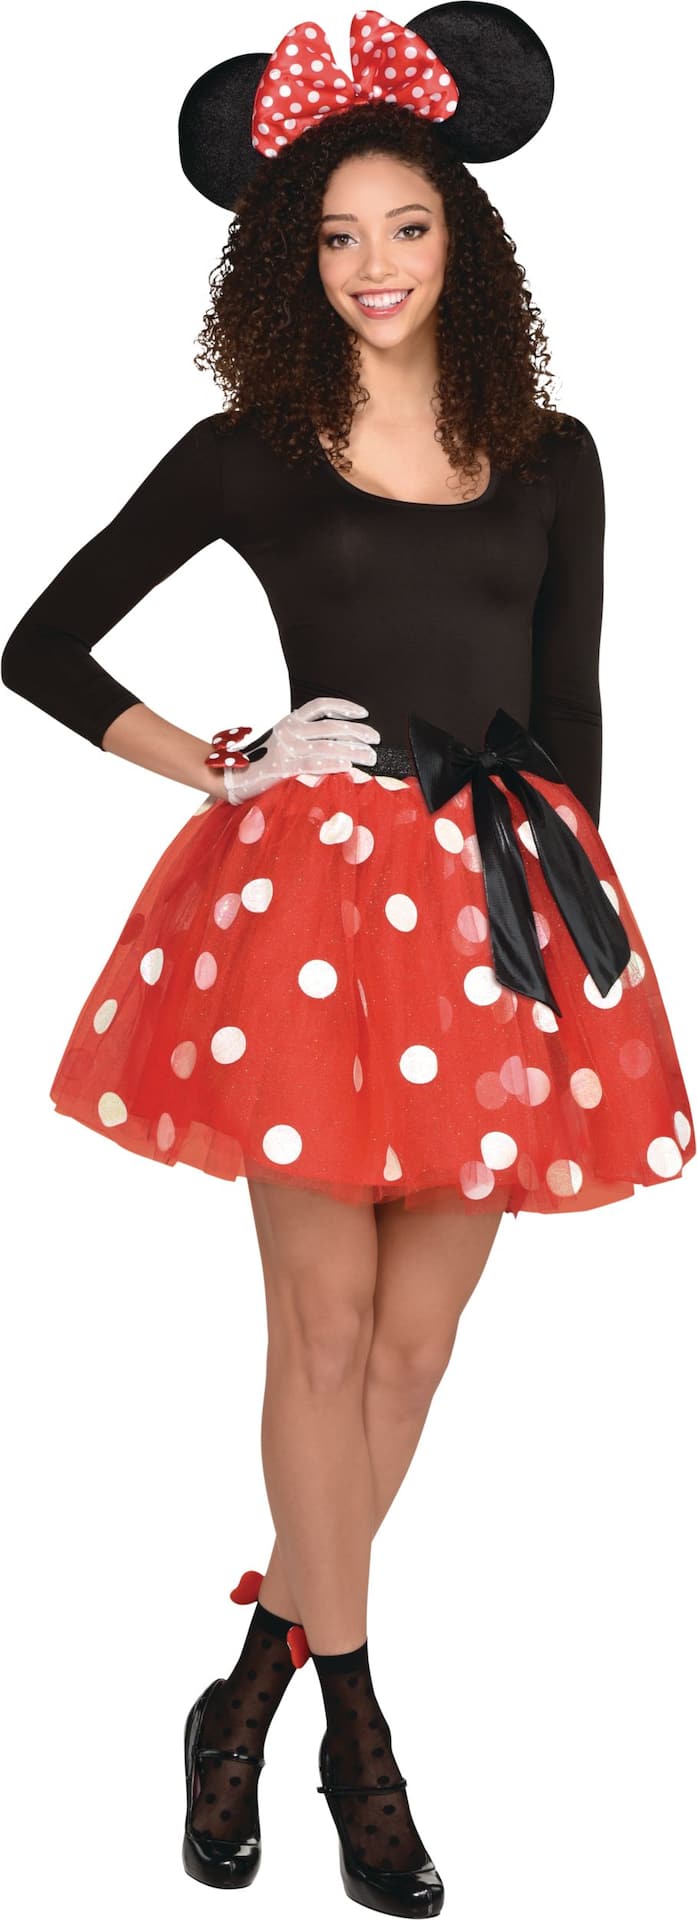 Best Polka Dots Dress Set for Girls Halloween Costume